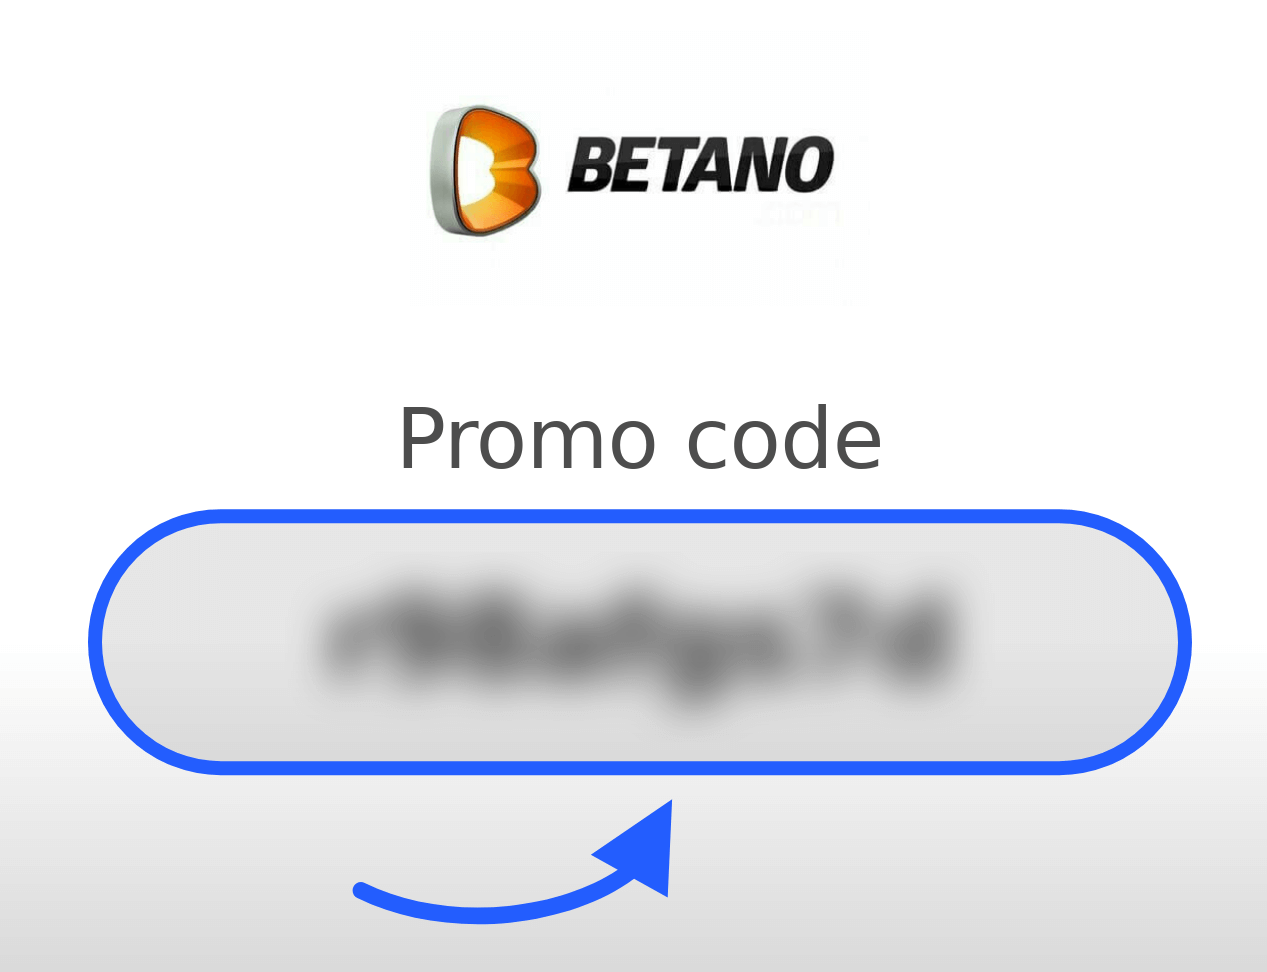 Betano Promo Code